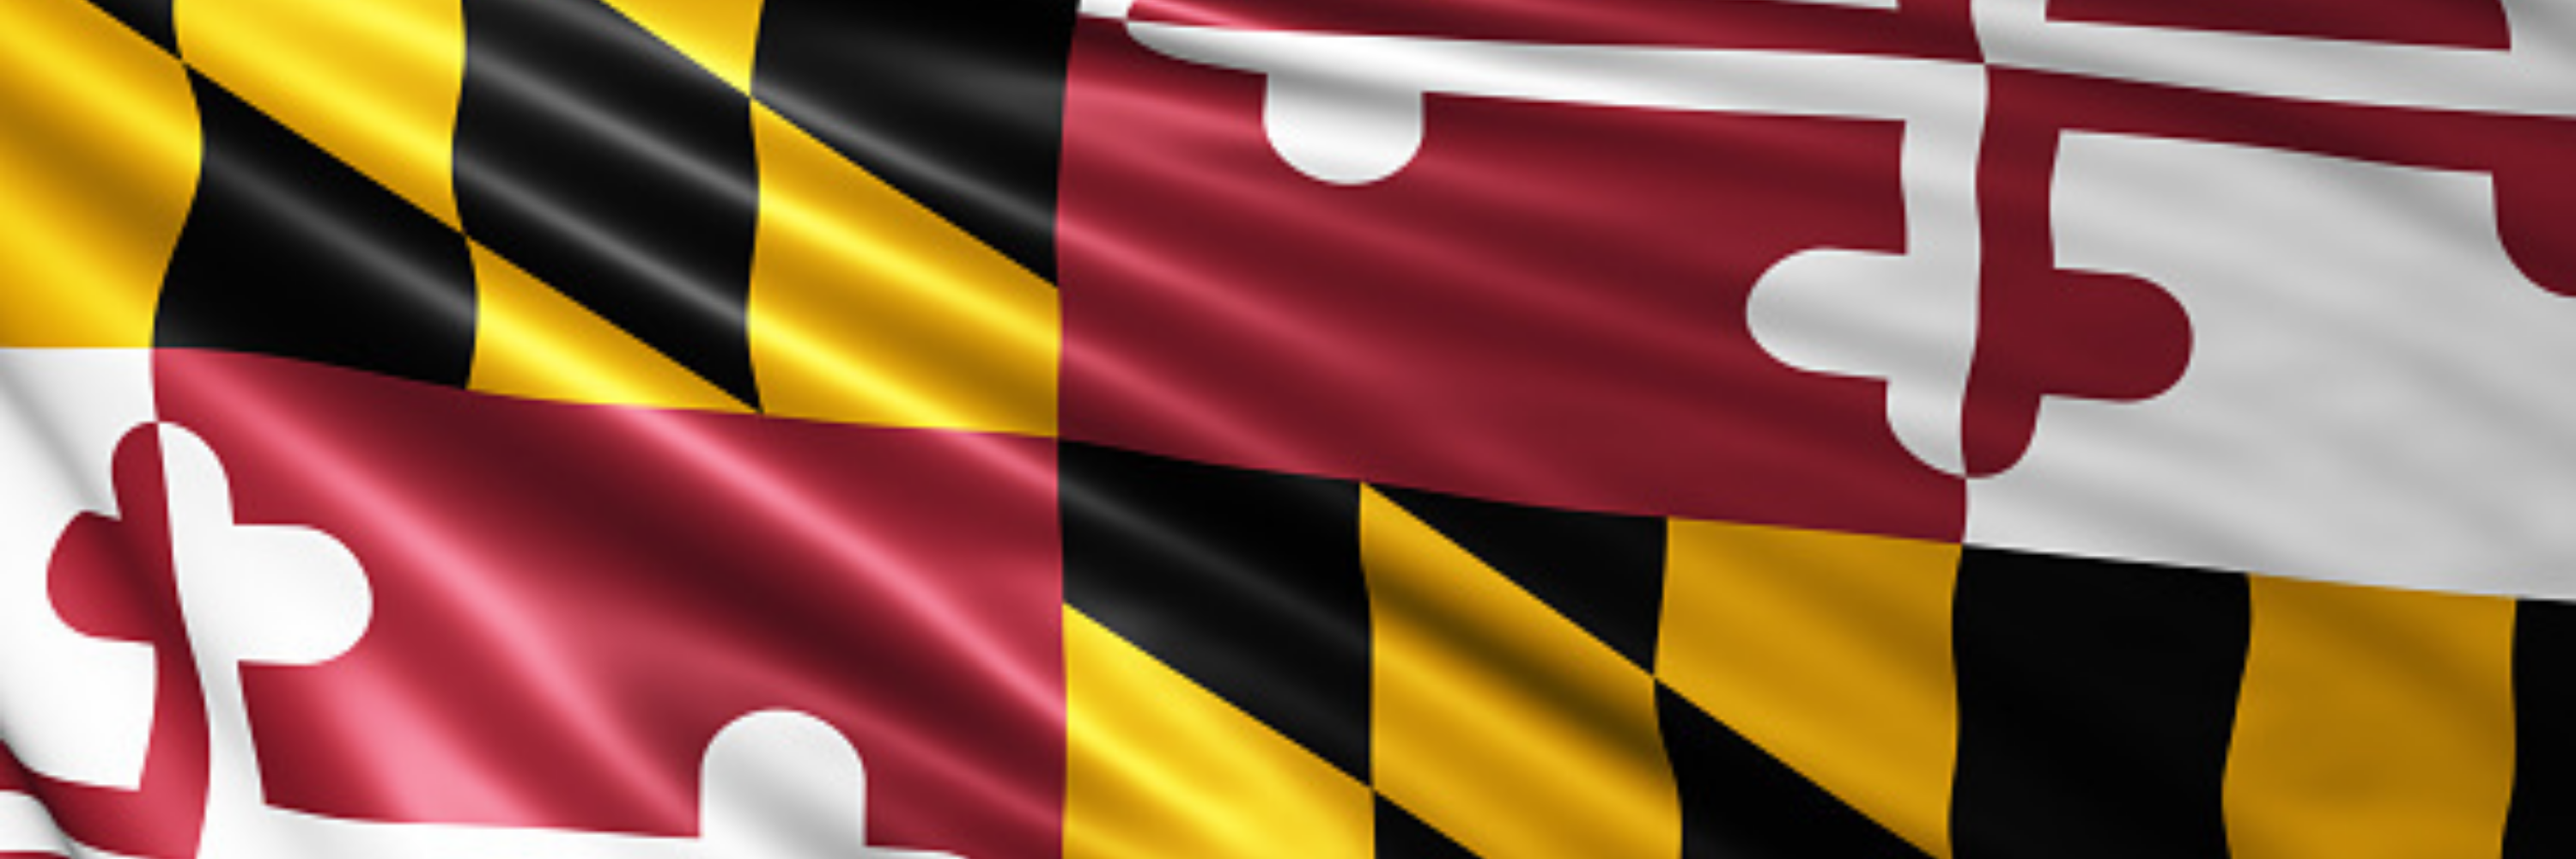 Maryland Legal Lexicon